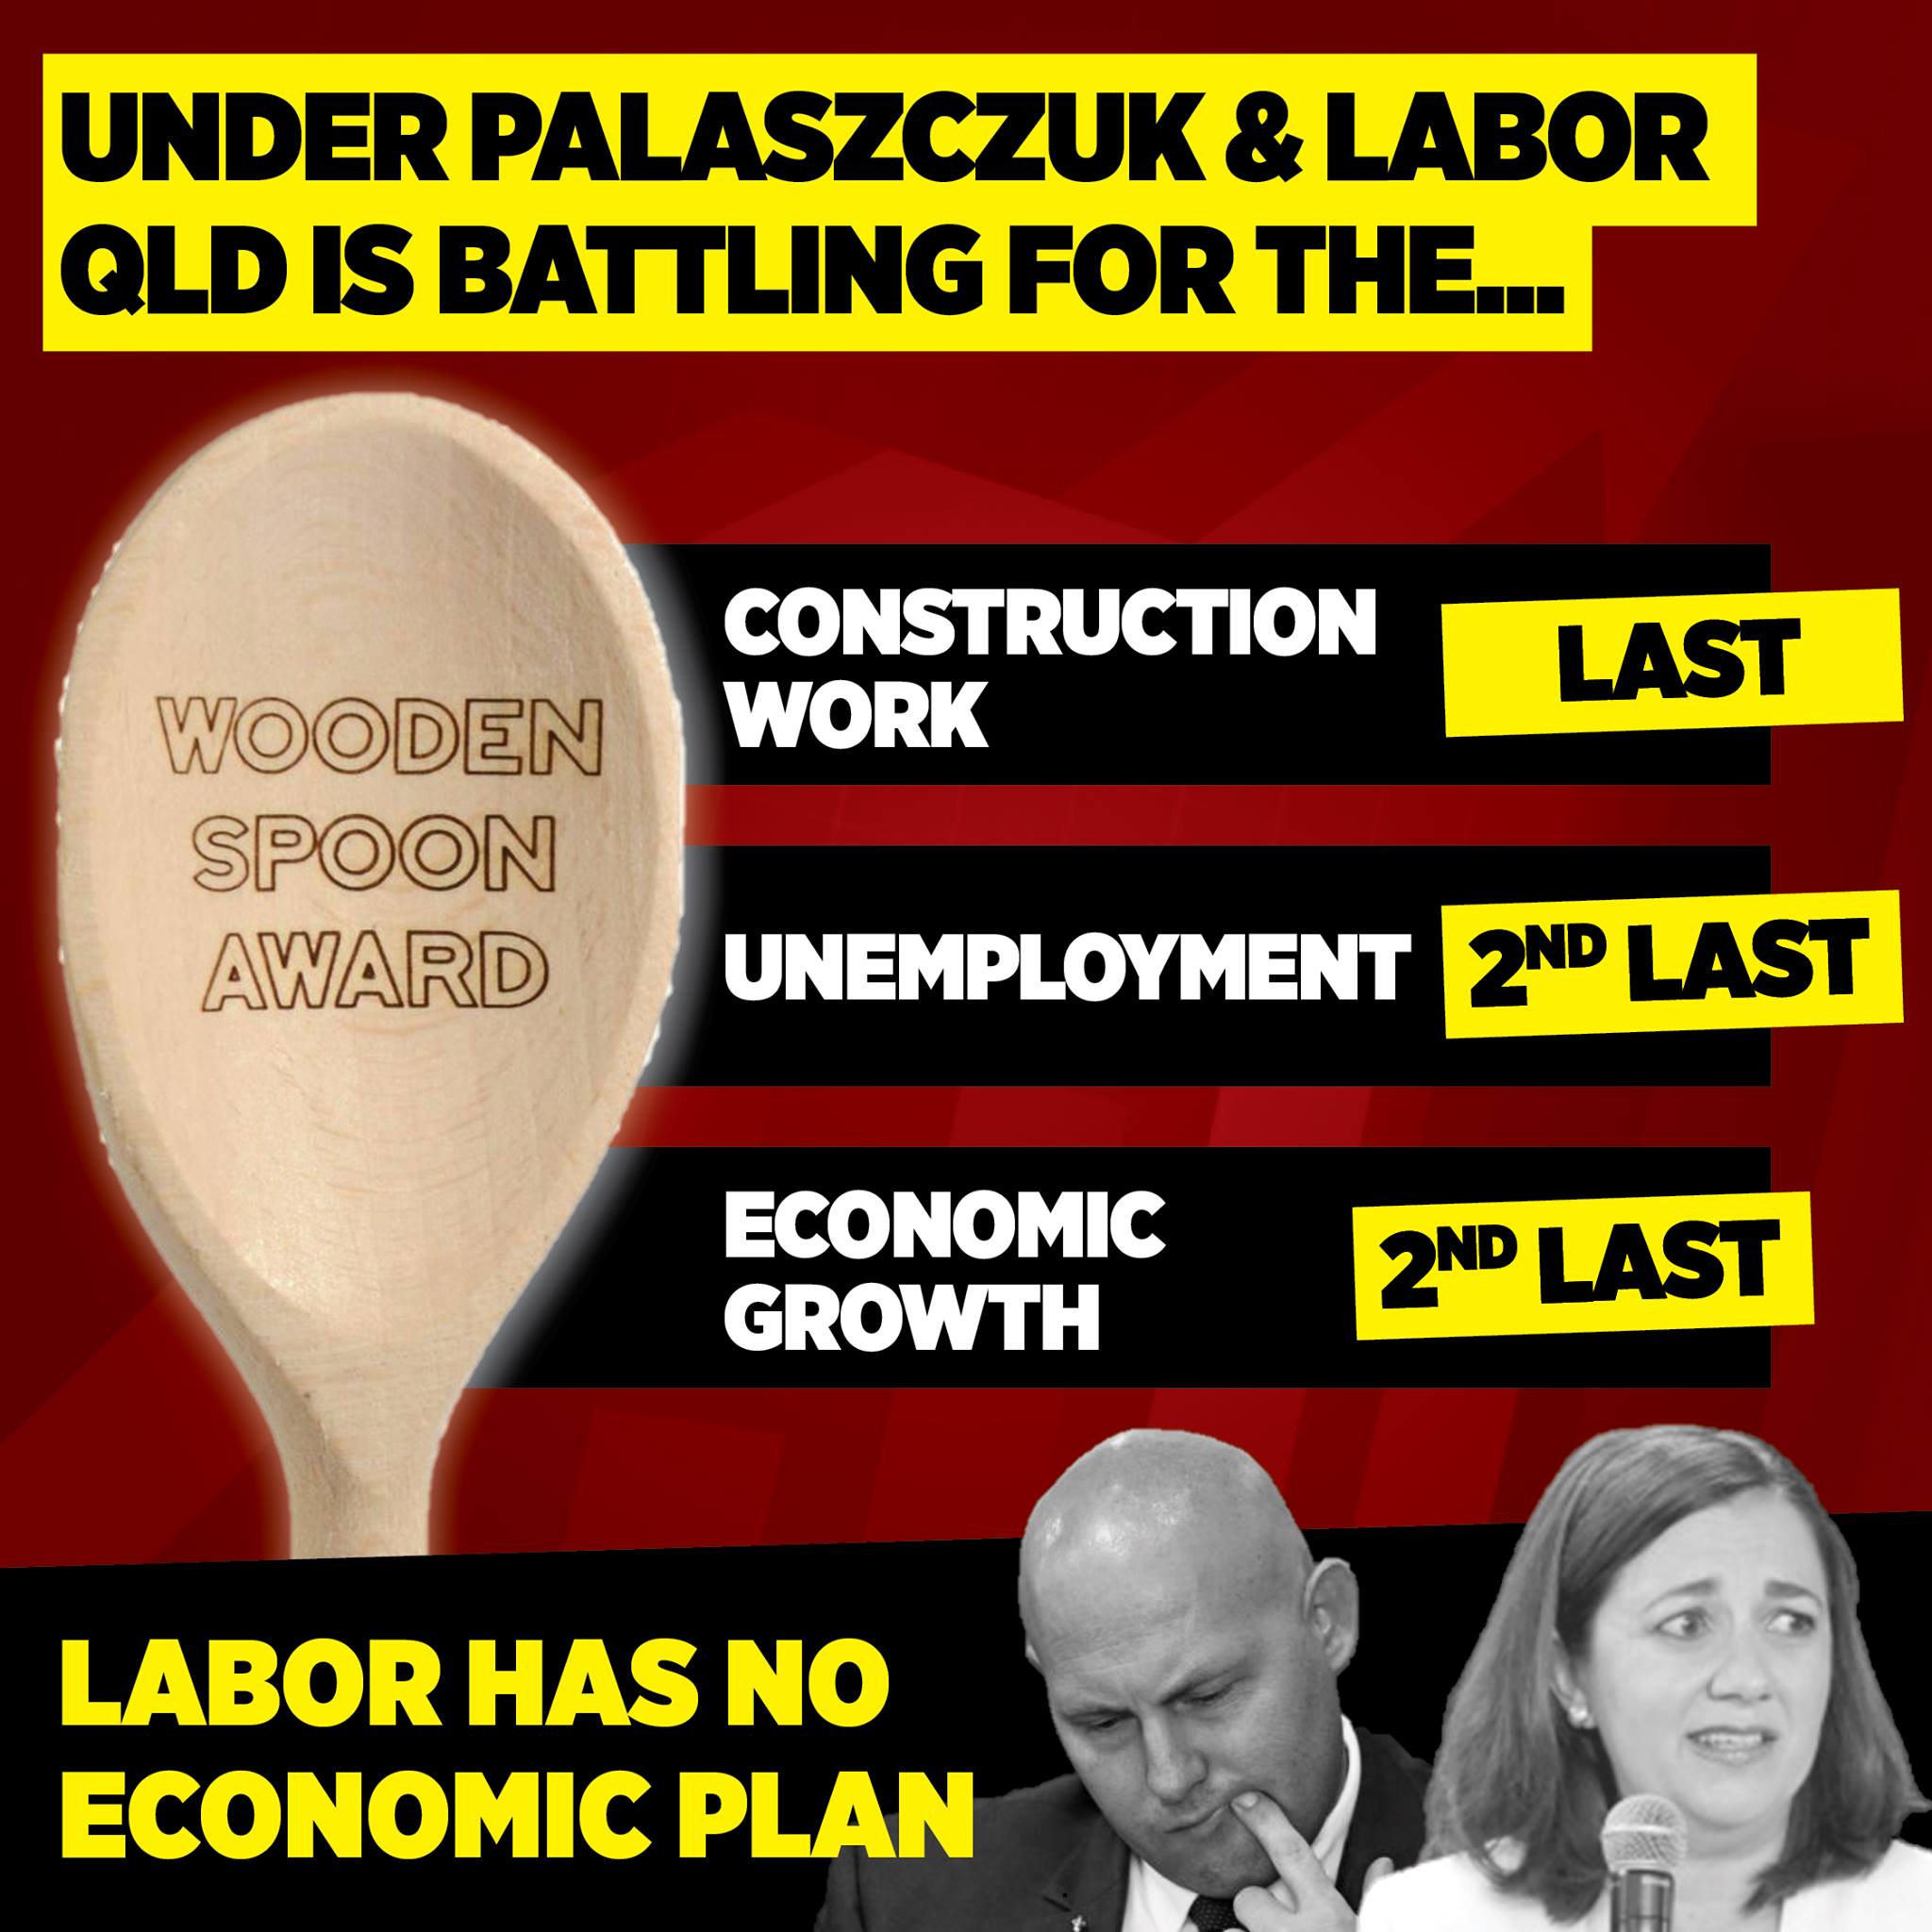  Queensland languishing under the Palaszczuk Labor Government